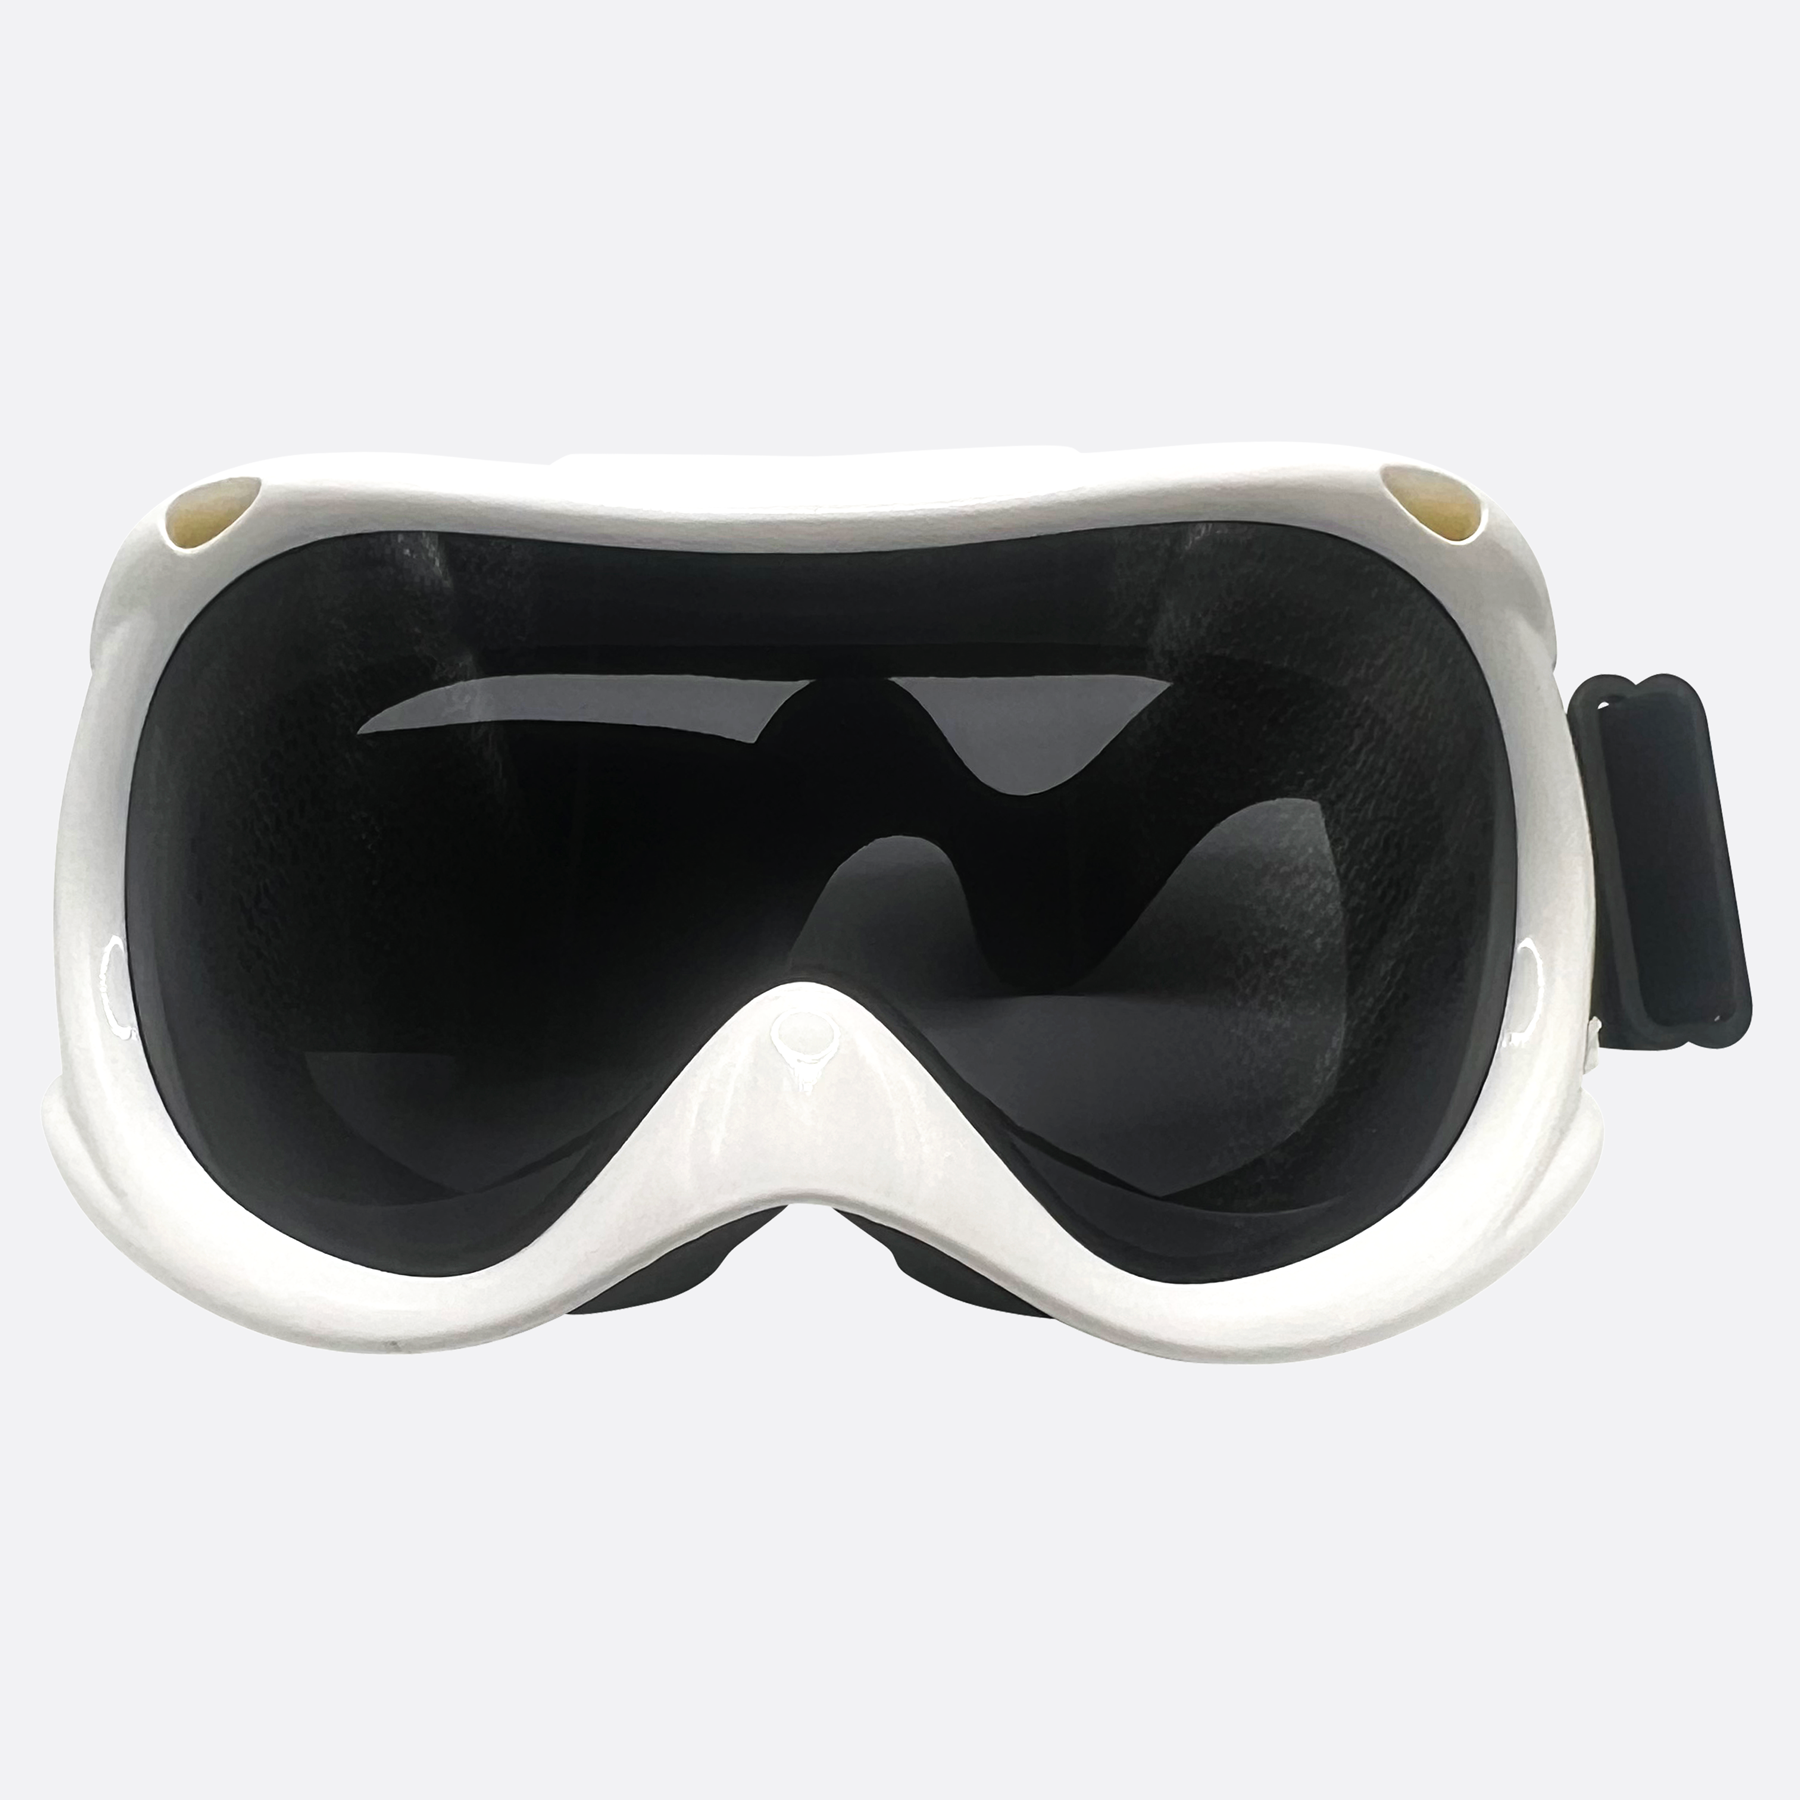 SNOWCAP Luxury Snow Goggles